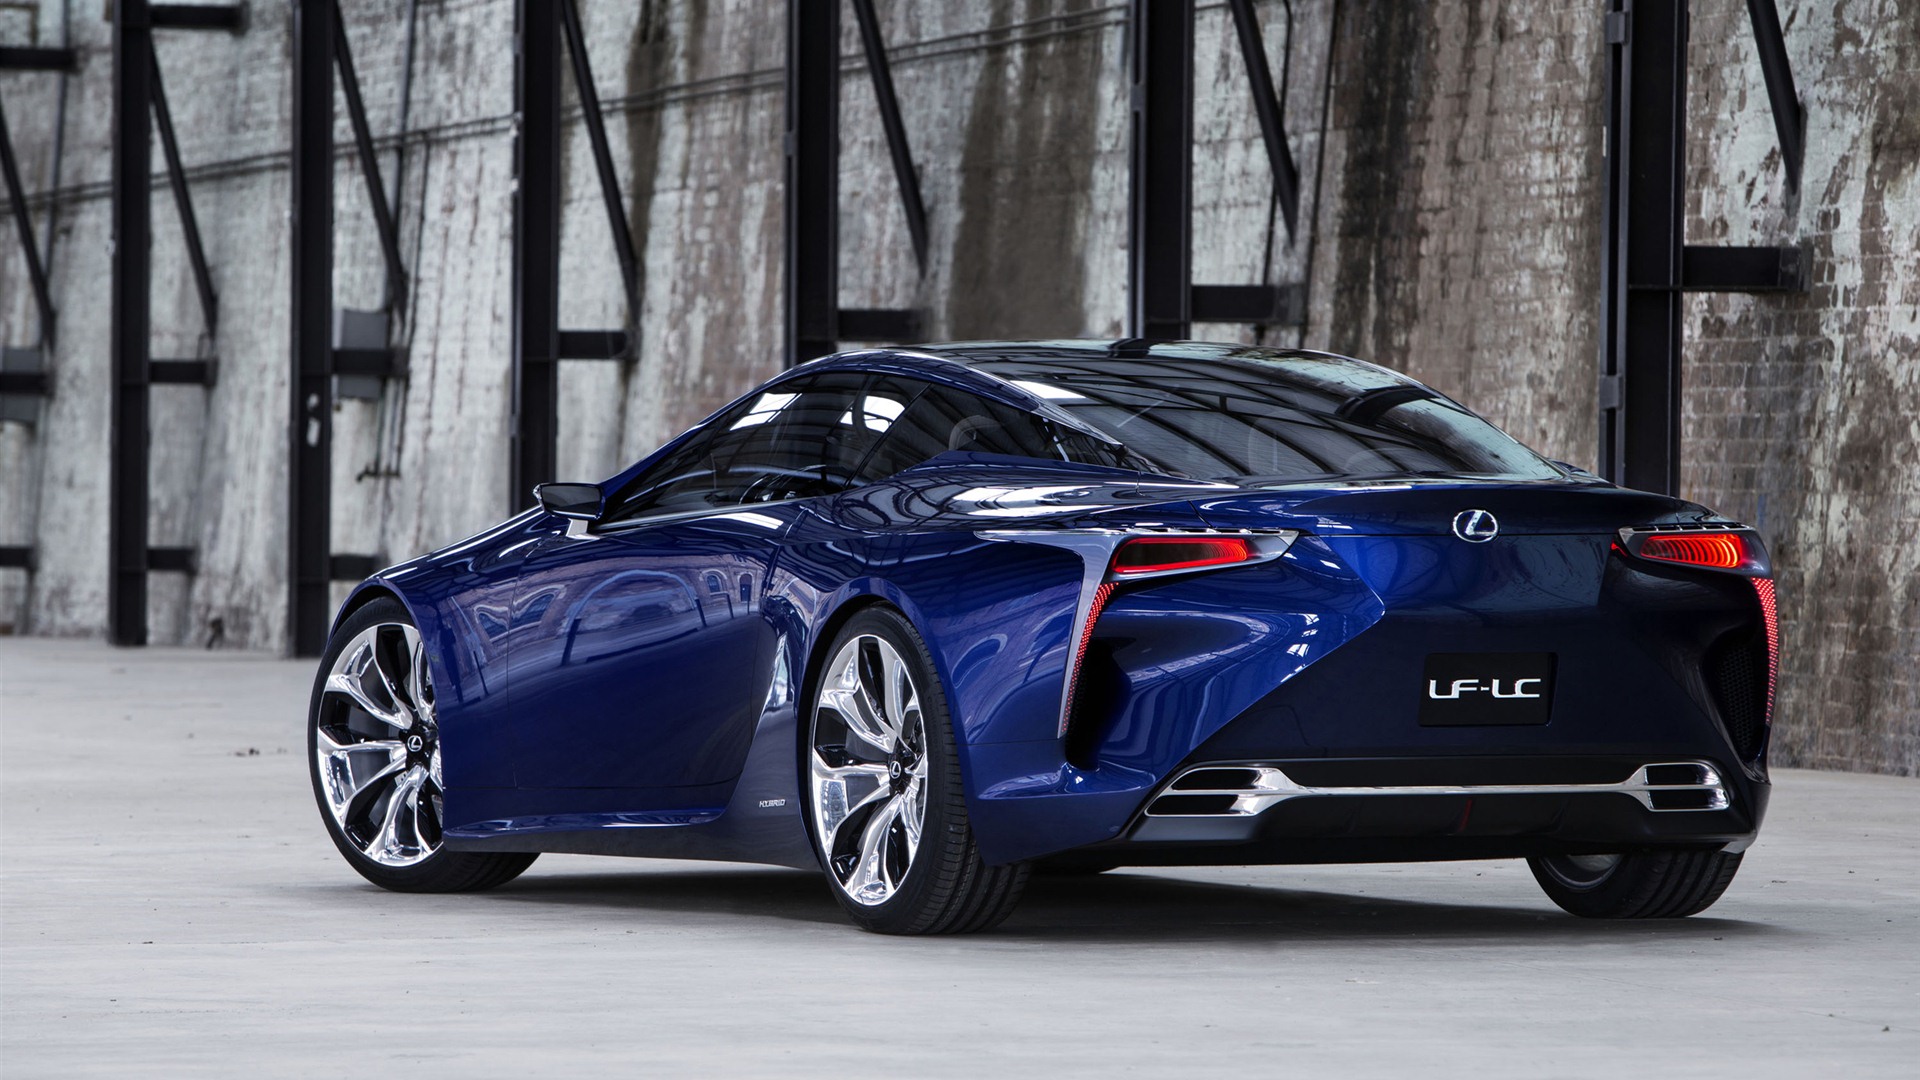 2012 Lexus LF-LC Blue concept 雷克萨斯 蓝色概念车 高清壁纸5 - 1920x1080